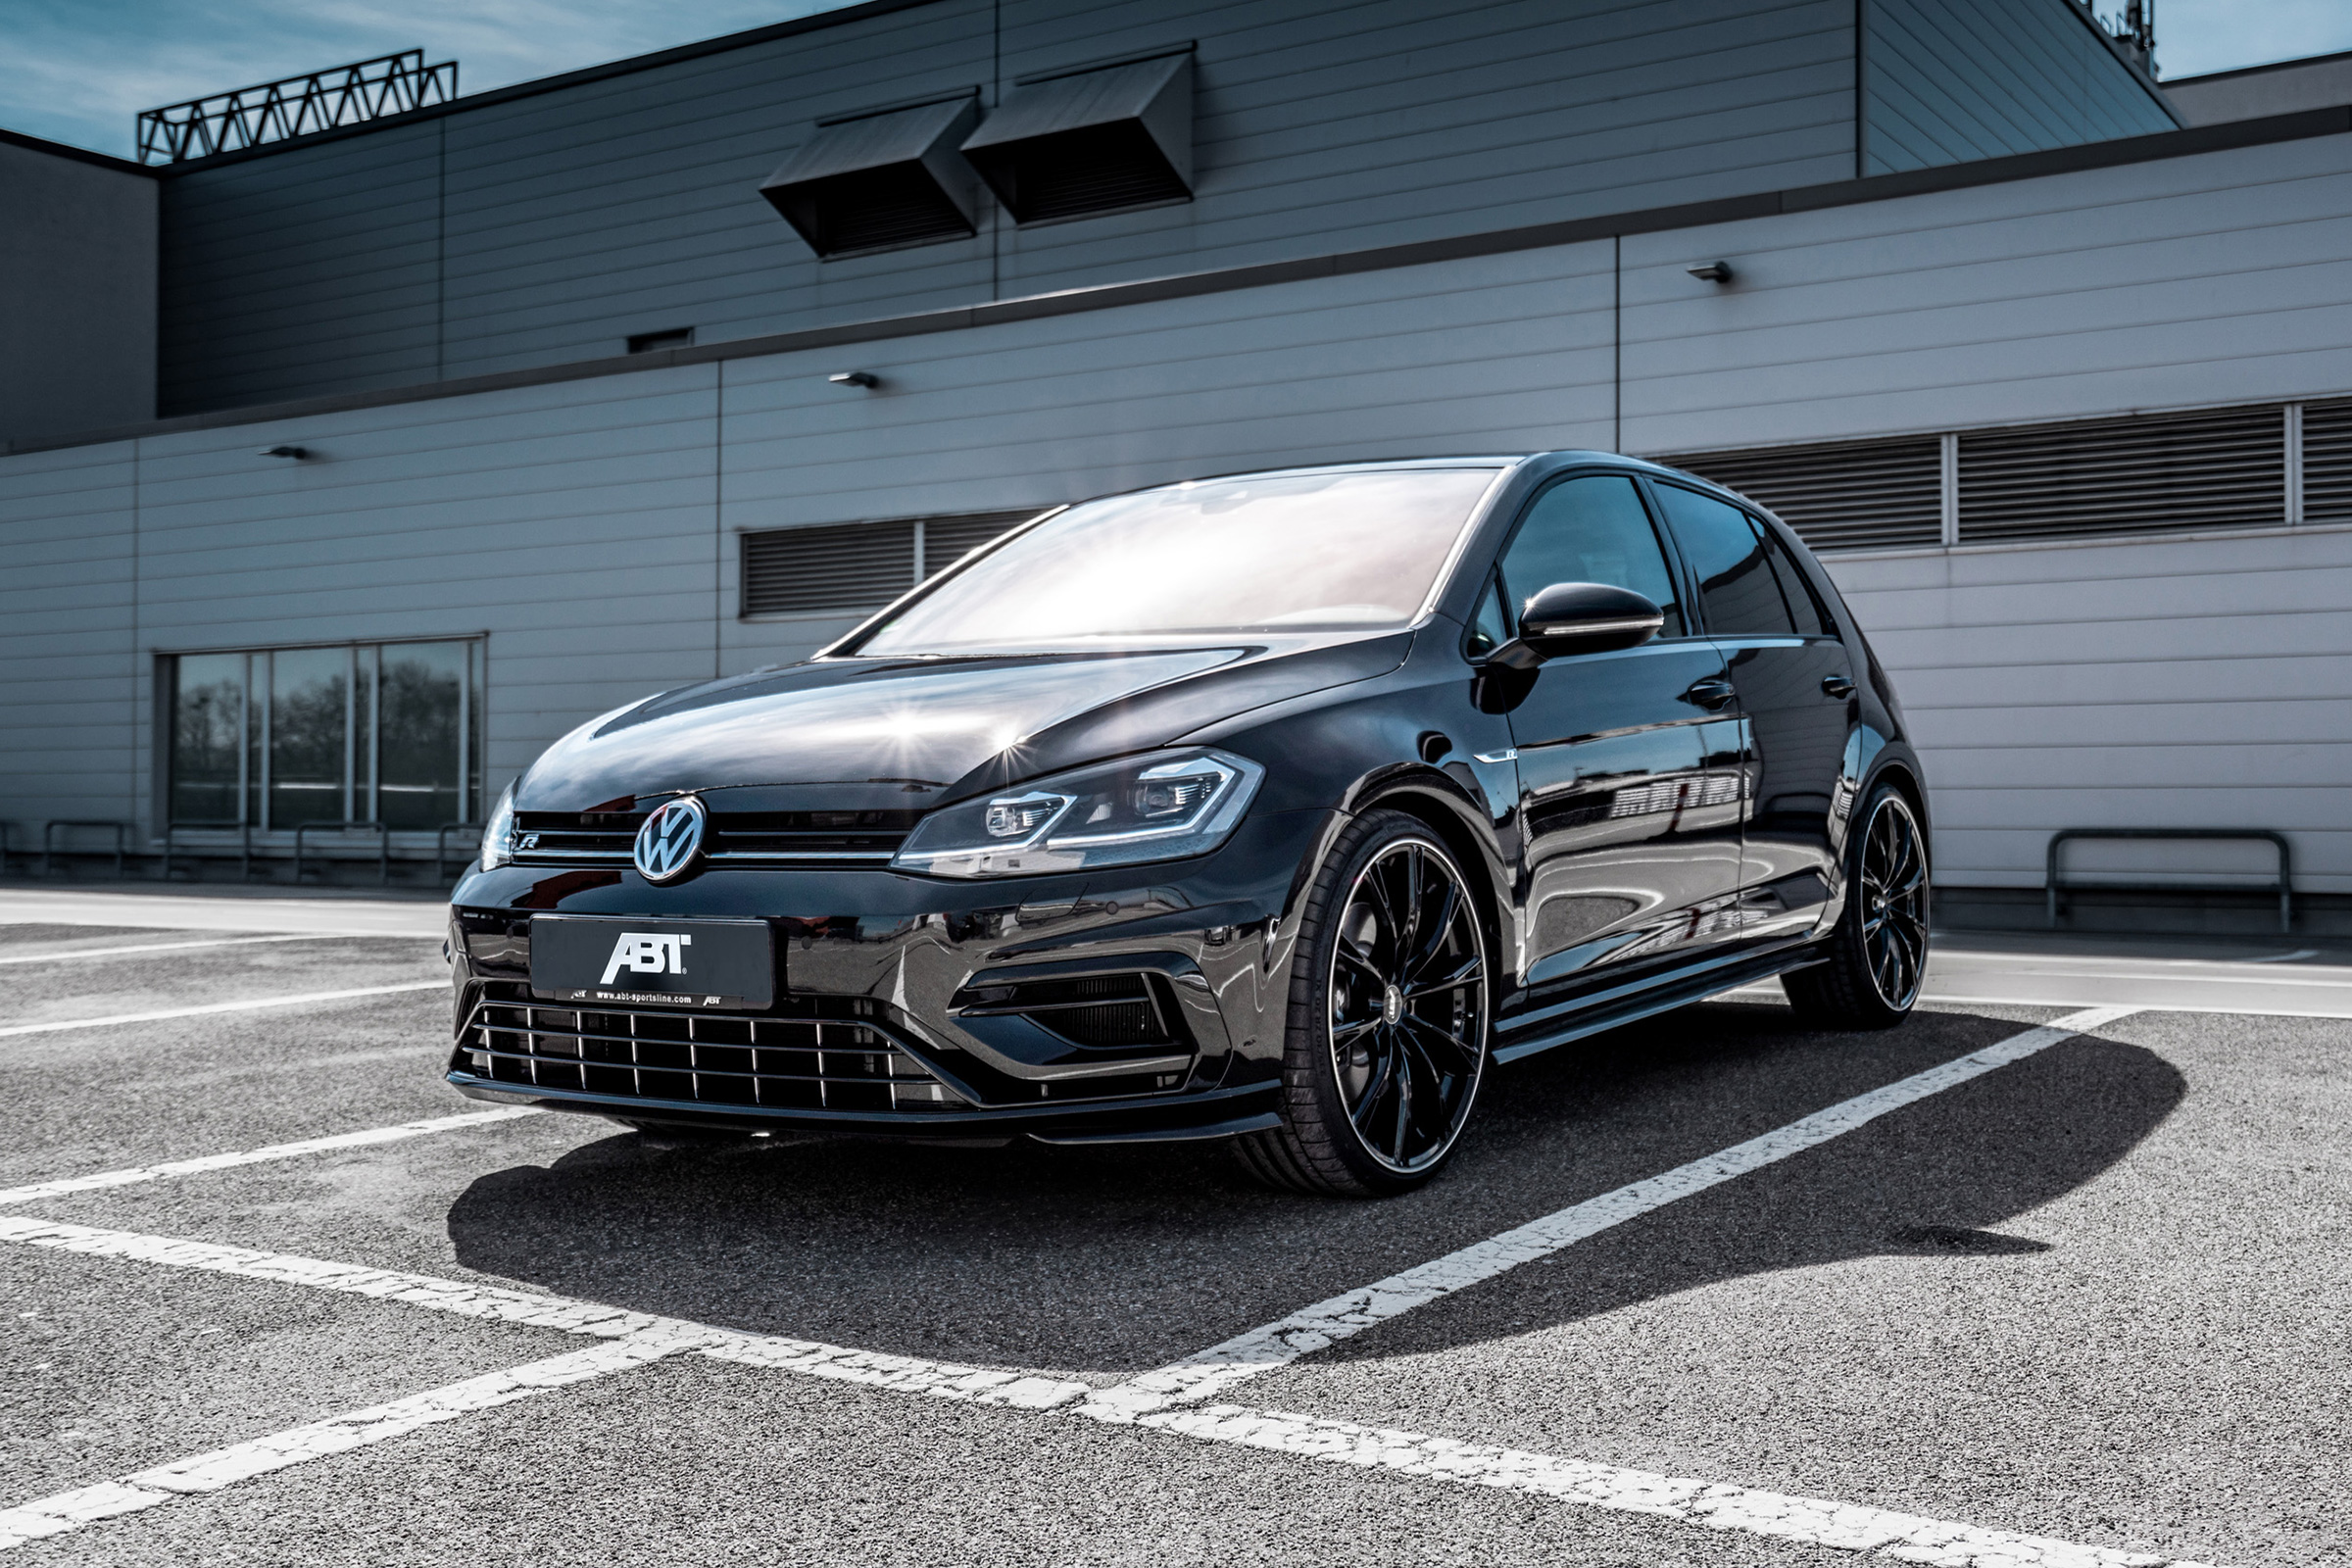 German tuner Abt’s upgrade takes 2019 Volkswagen Golf R power to 345bhp ...